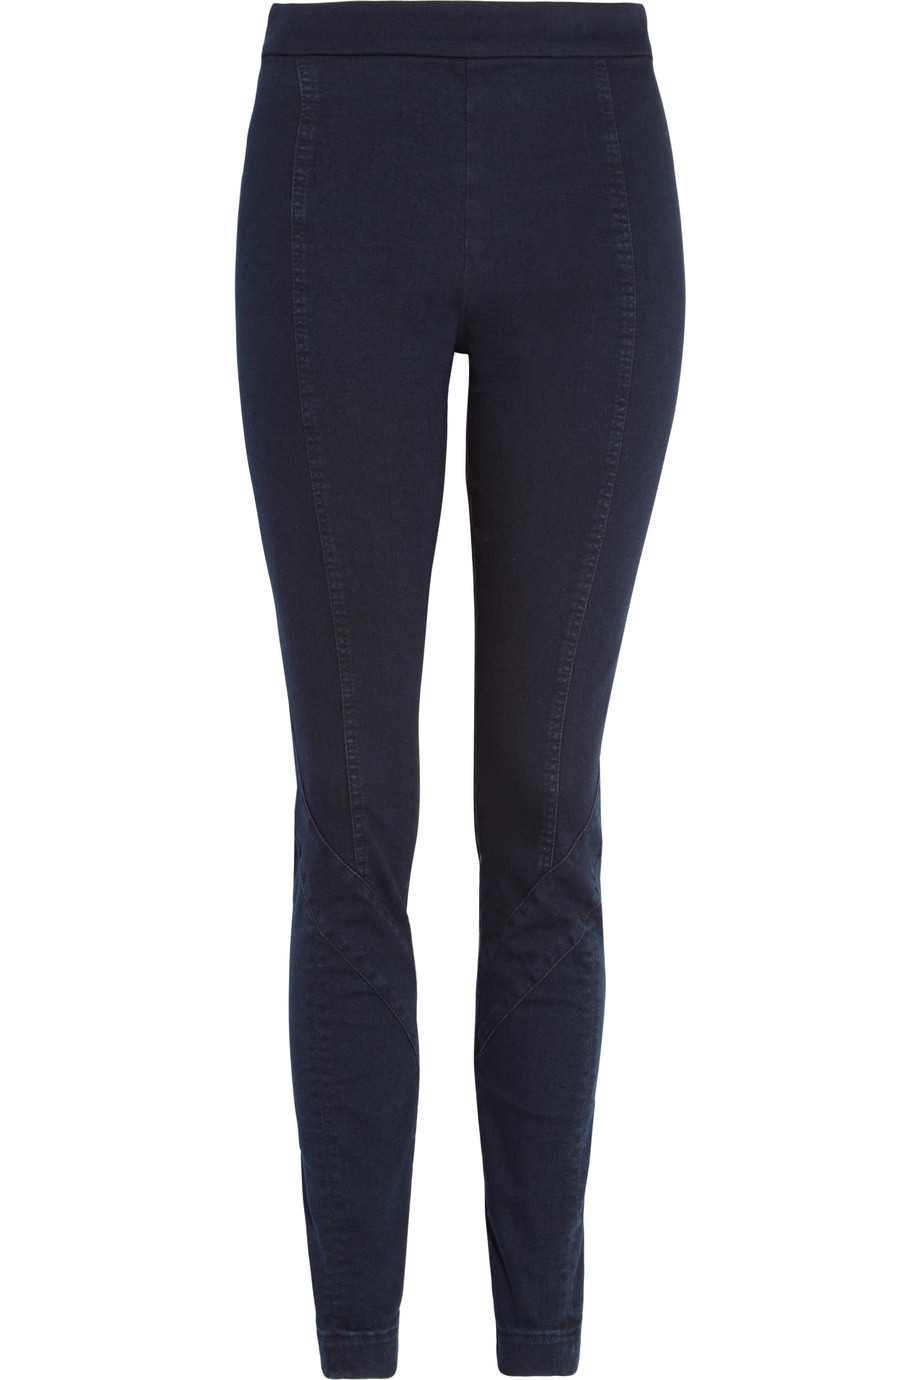 Donna Karan New York Highrise Skinny Jeans in Blue | Lyst